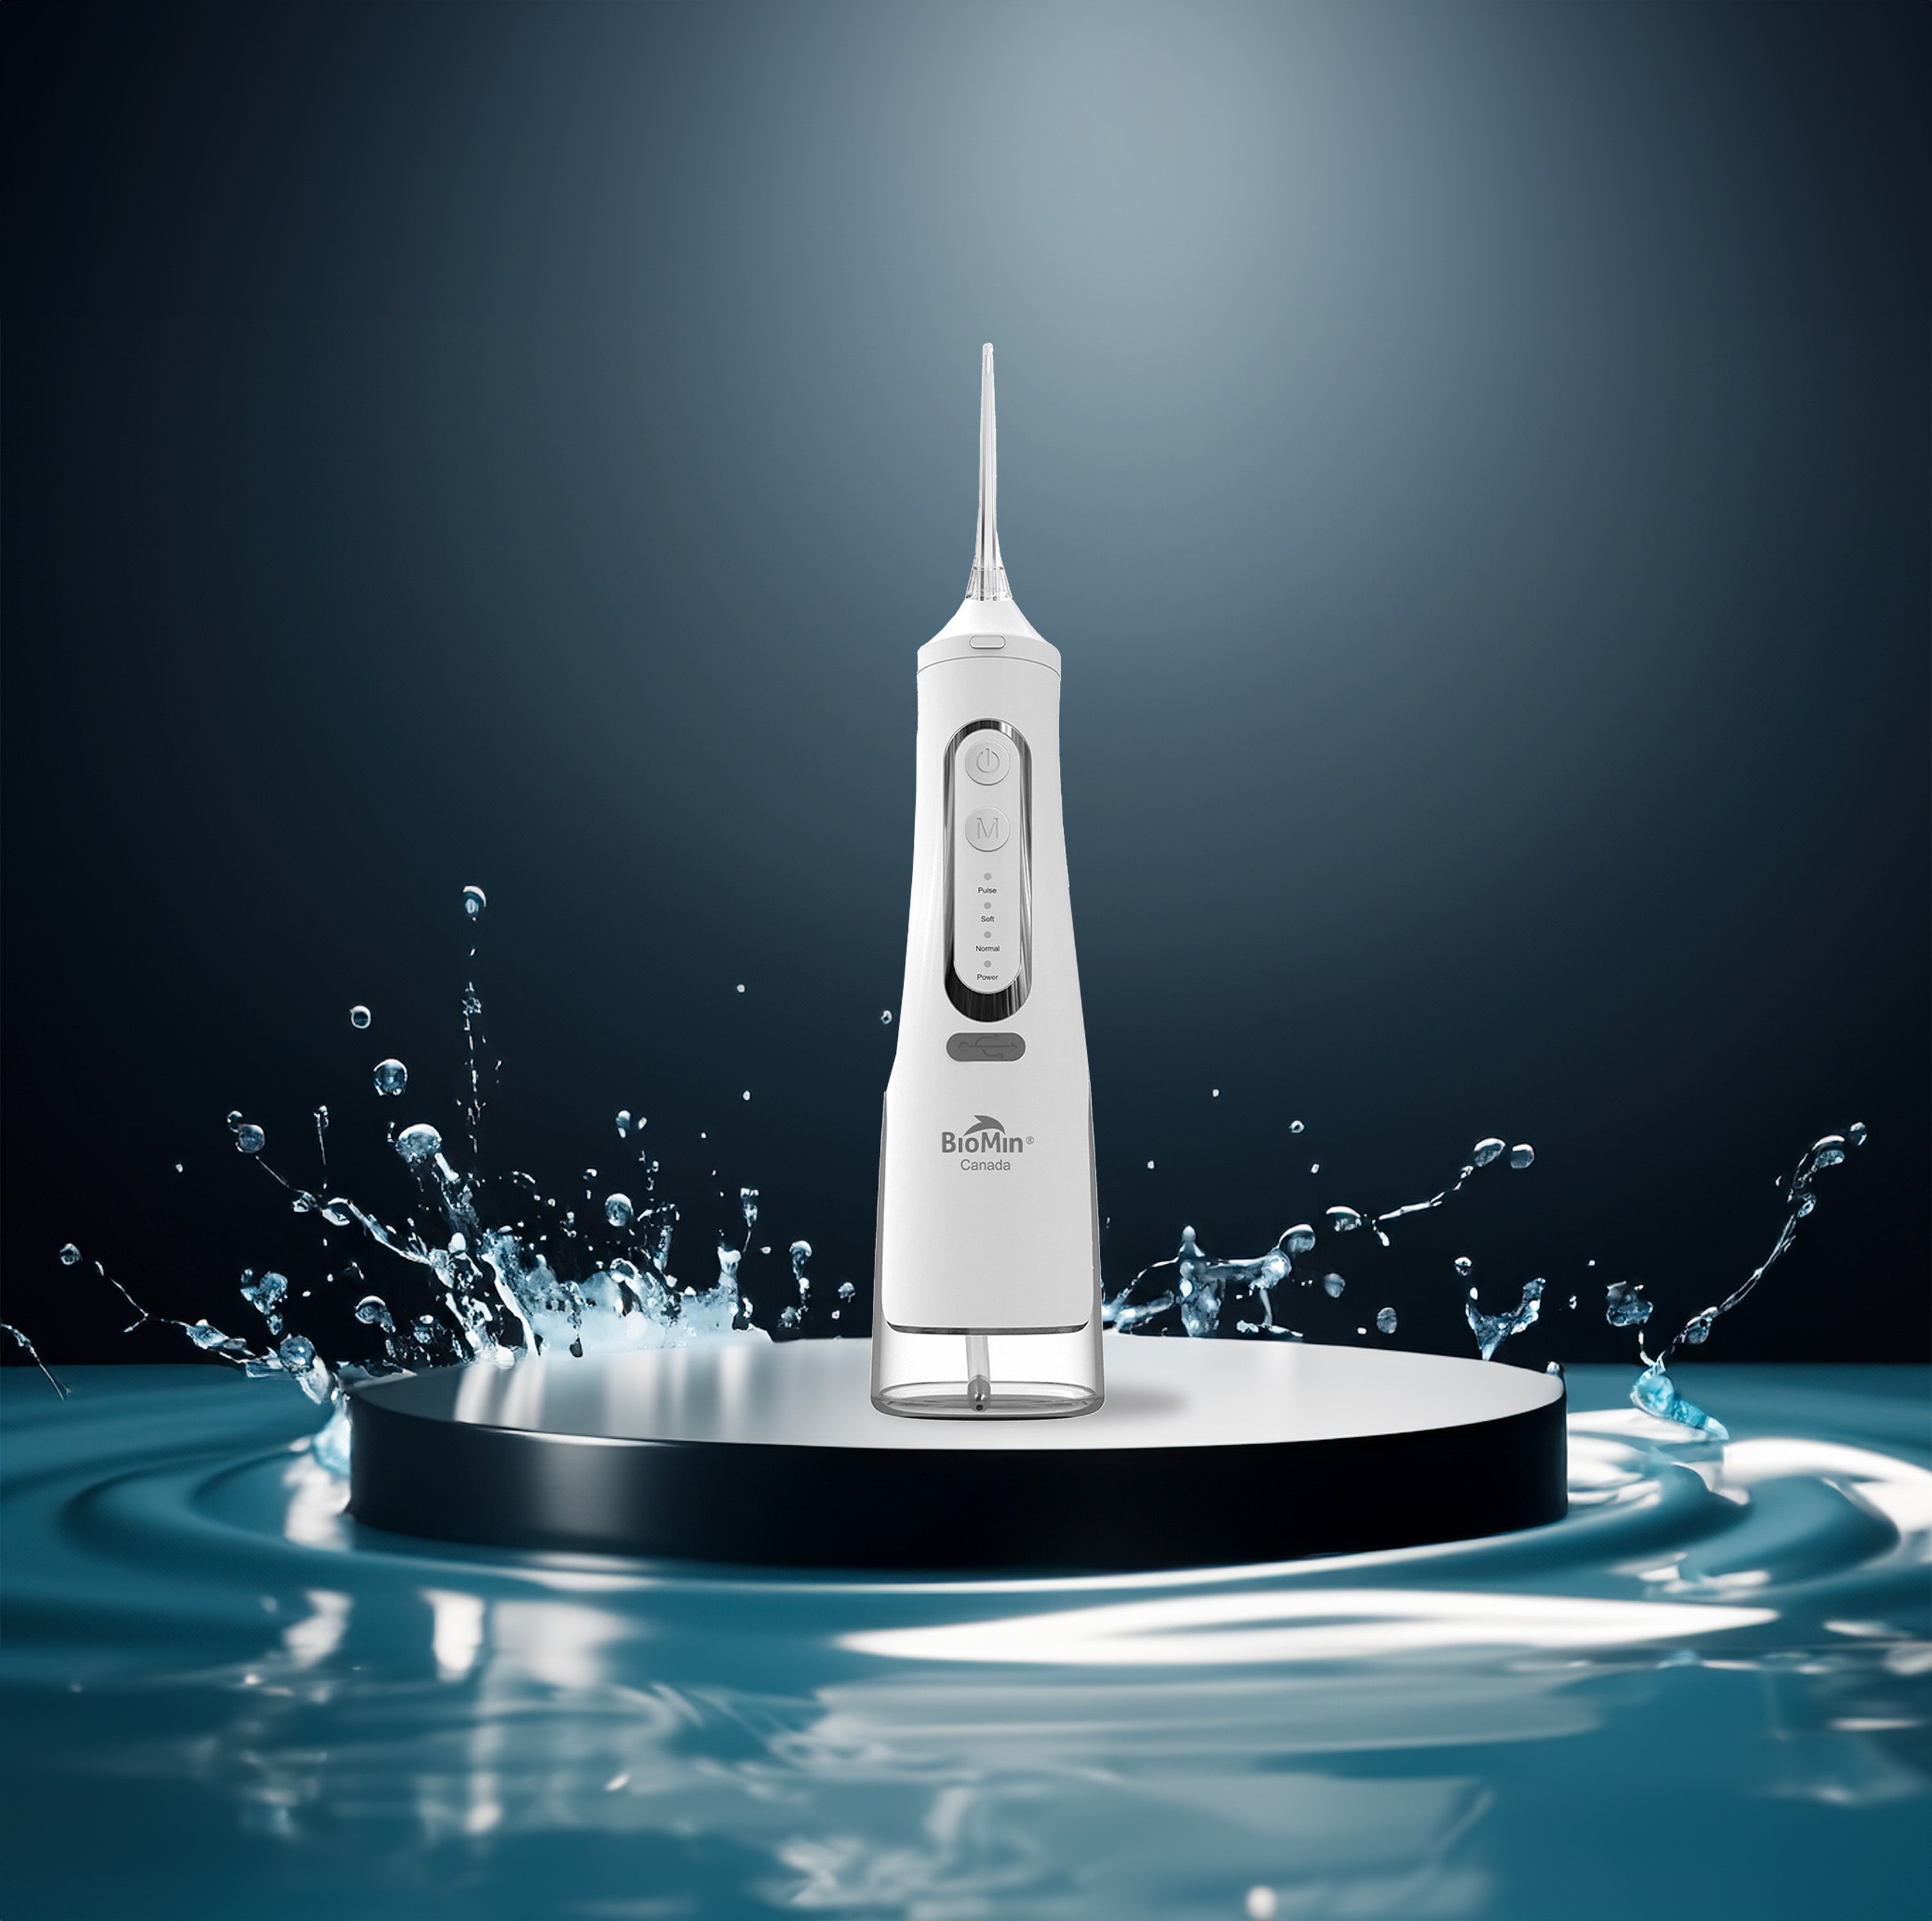 AquaFlow: Cordless Water Dental Flosser